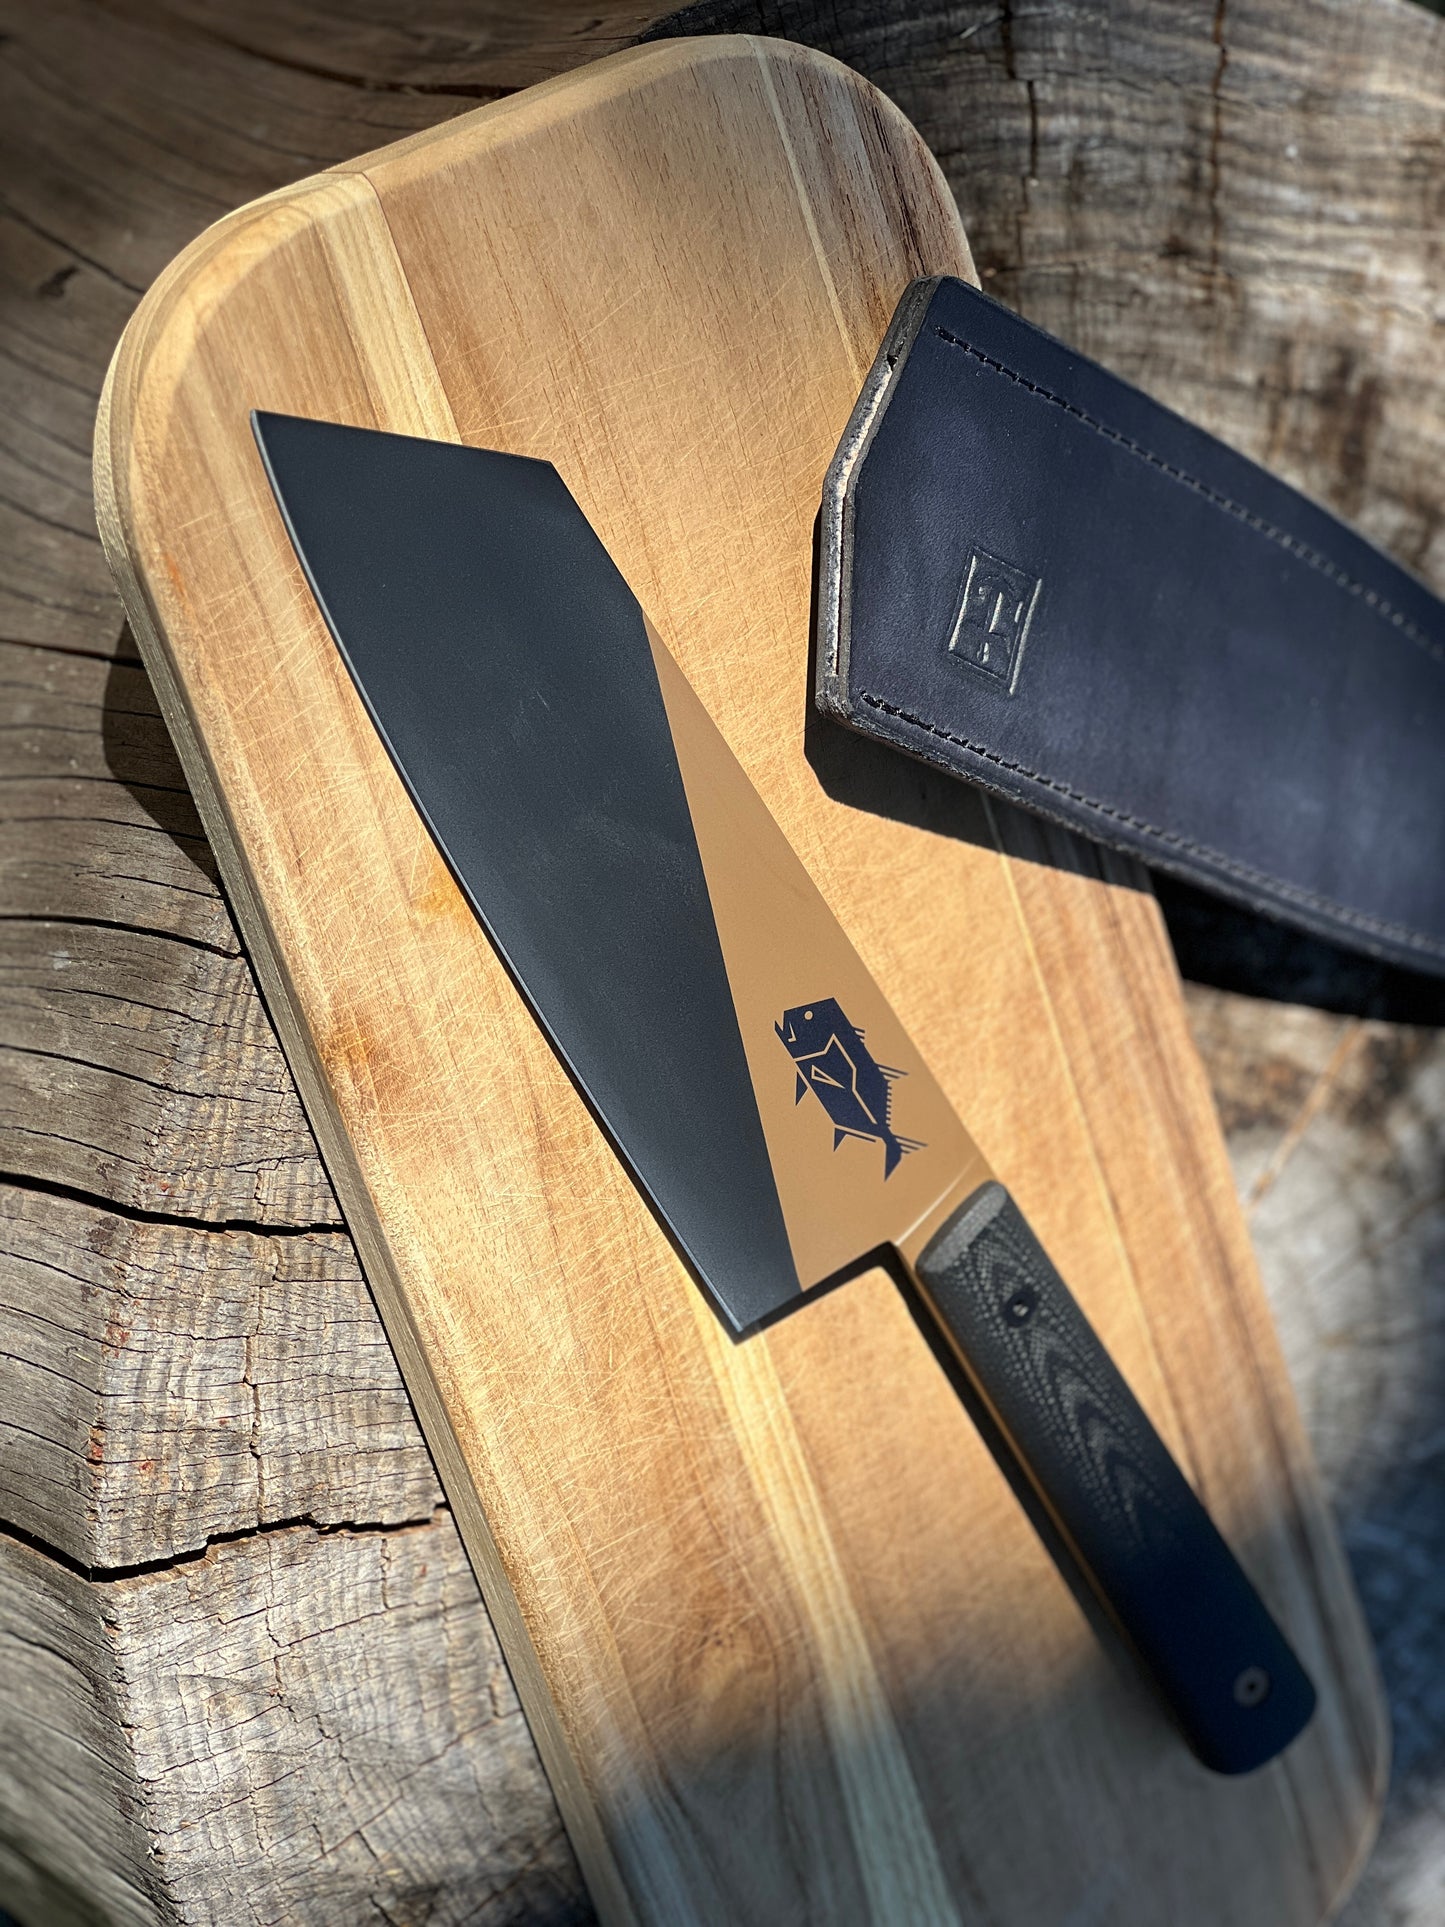 Bunka GT – All purpose Chef Knife